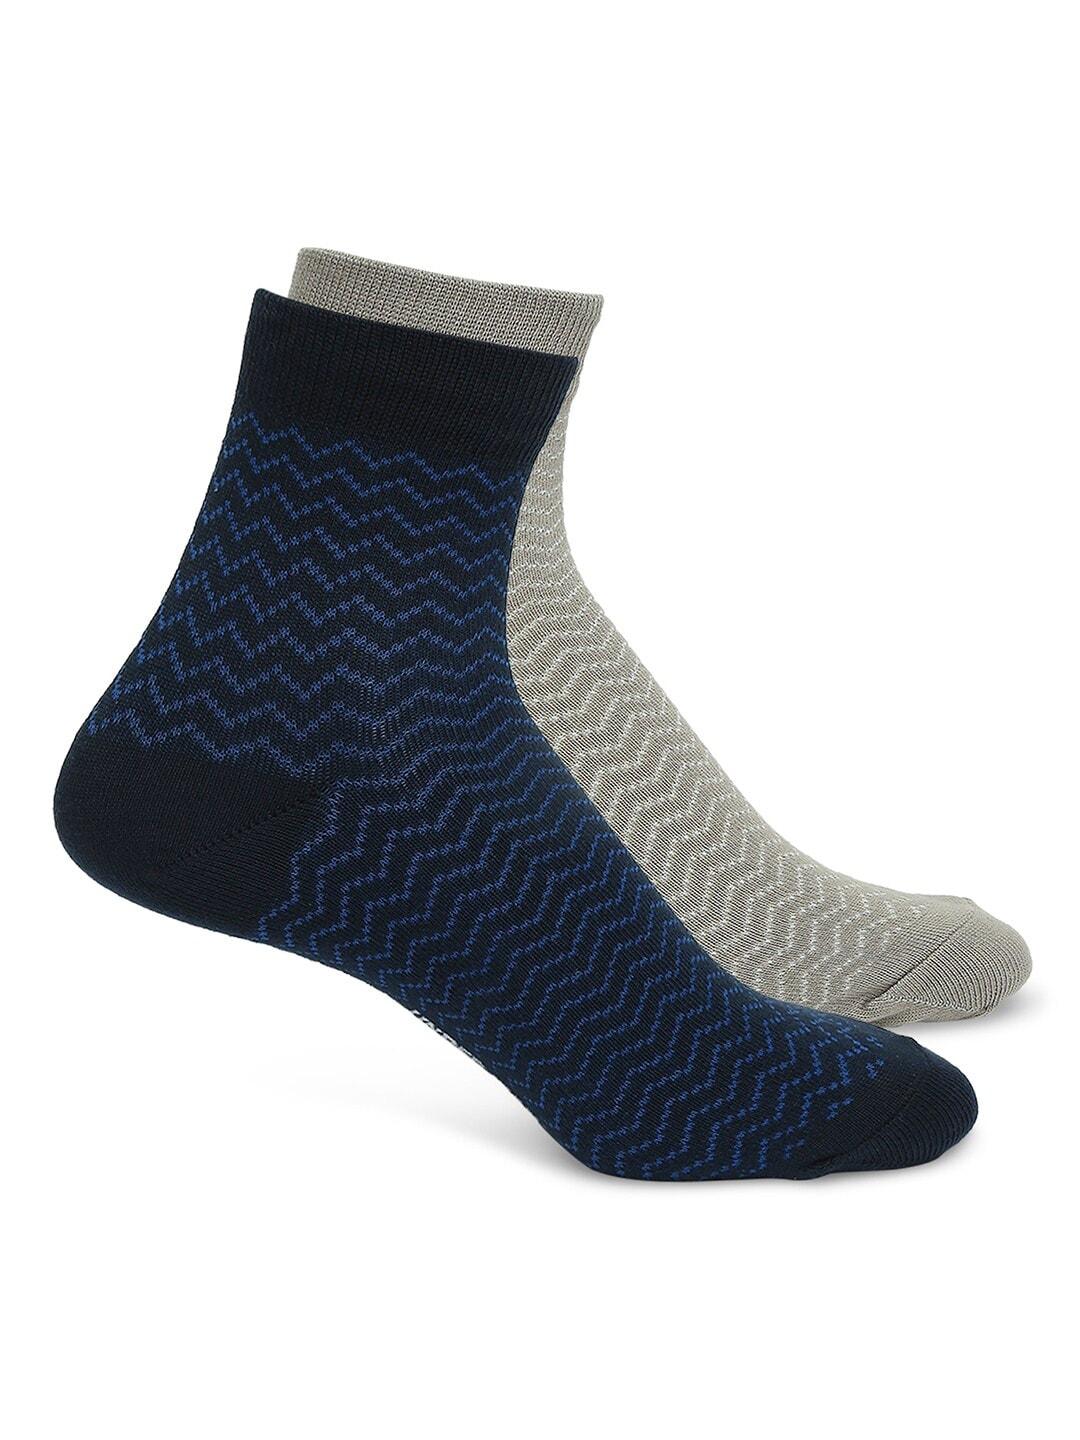 underjeans-by-spykar-men-pack-of-2-ankle-length-cotton-socks